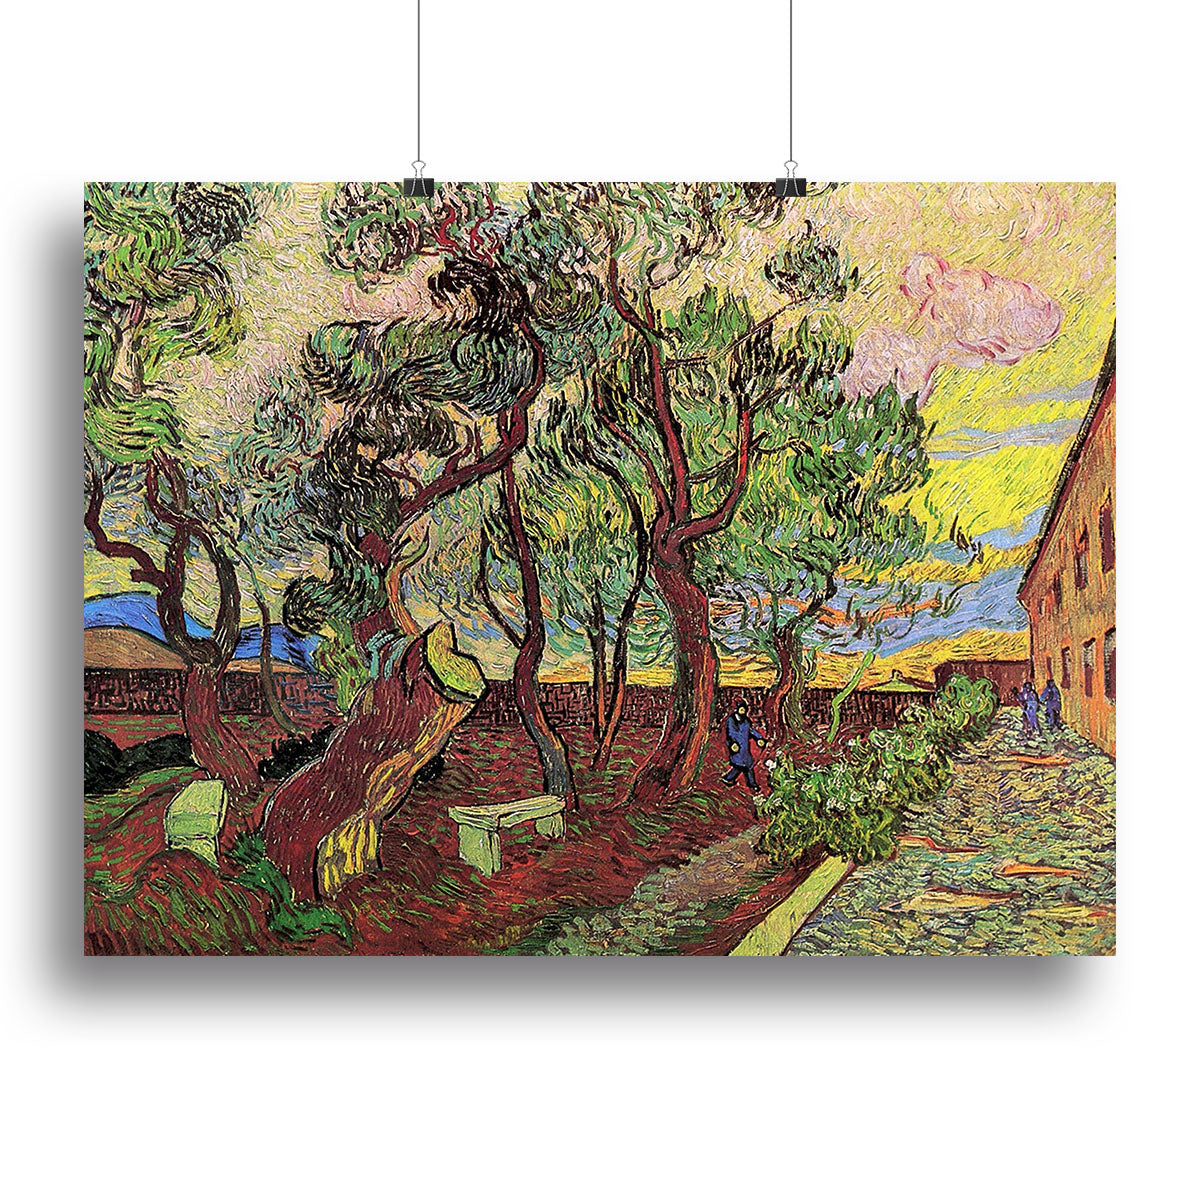 The Garden of Saint-Paul Hospital 3 by Van Gogh Canvas Print or Poster - Canvas Art Rocks - 2